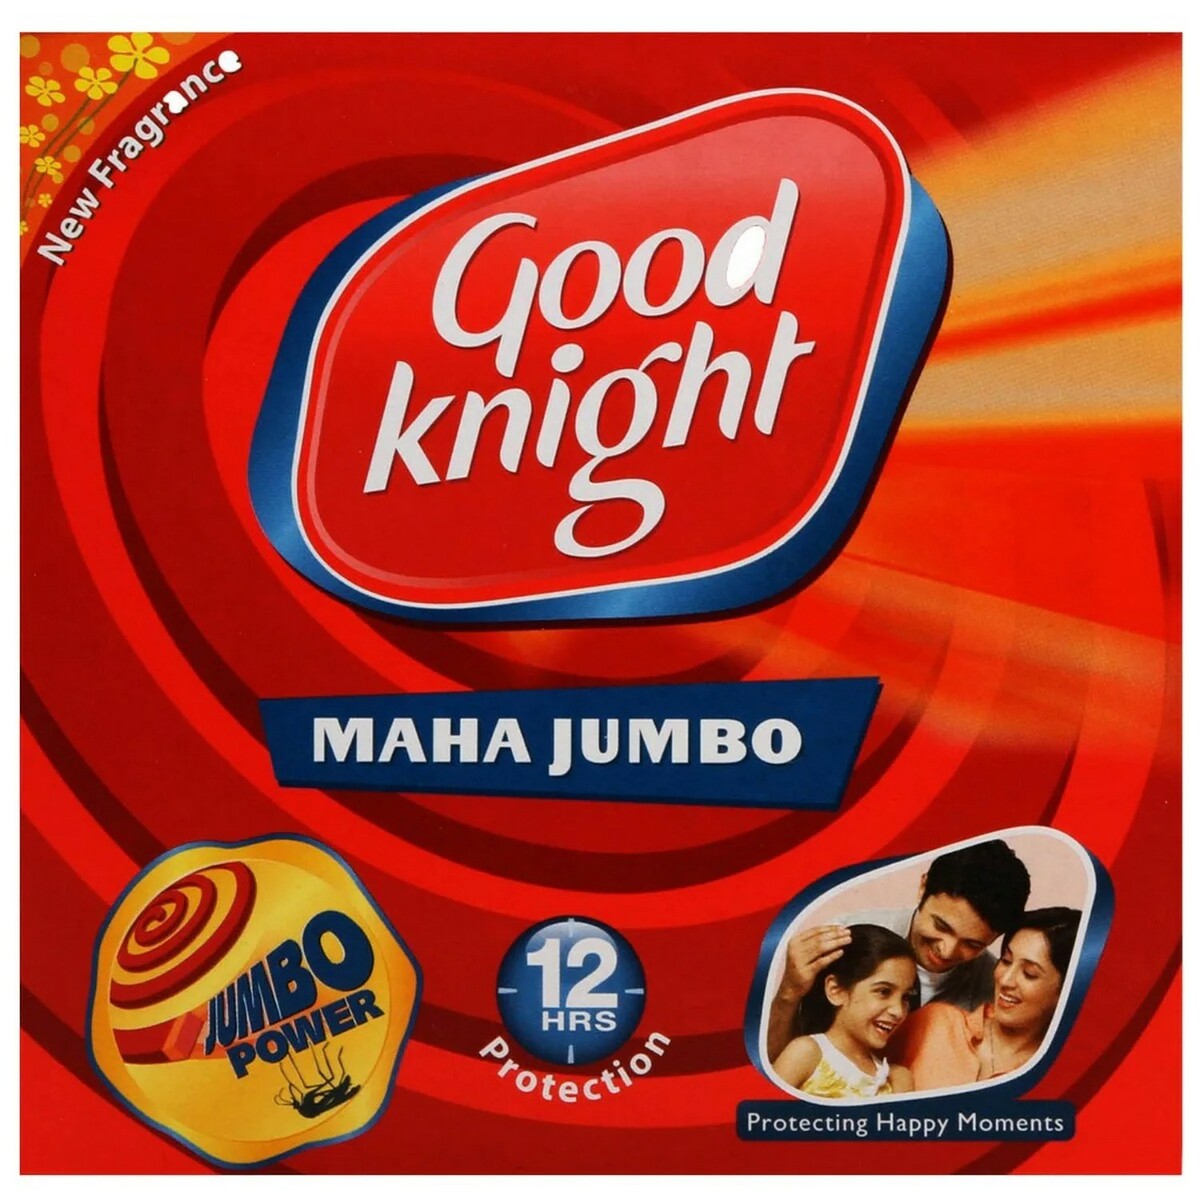 Good Knight Maha Jumbo Red Coil 12 Hours 1's